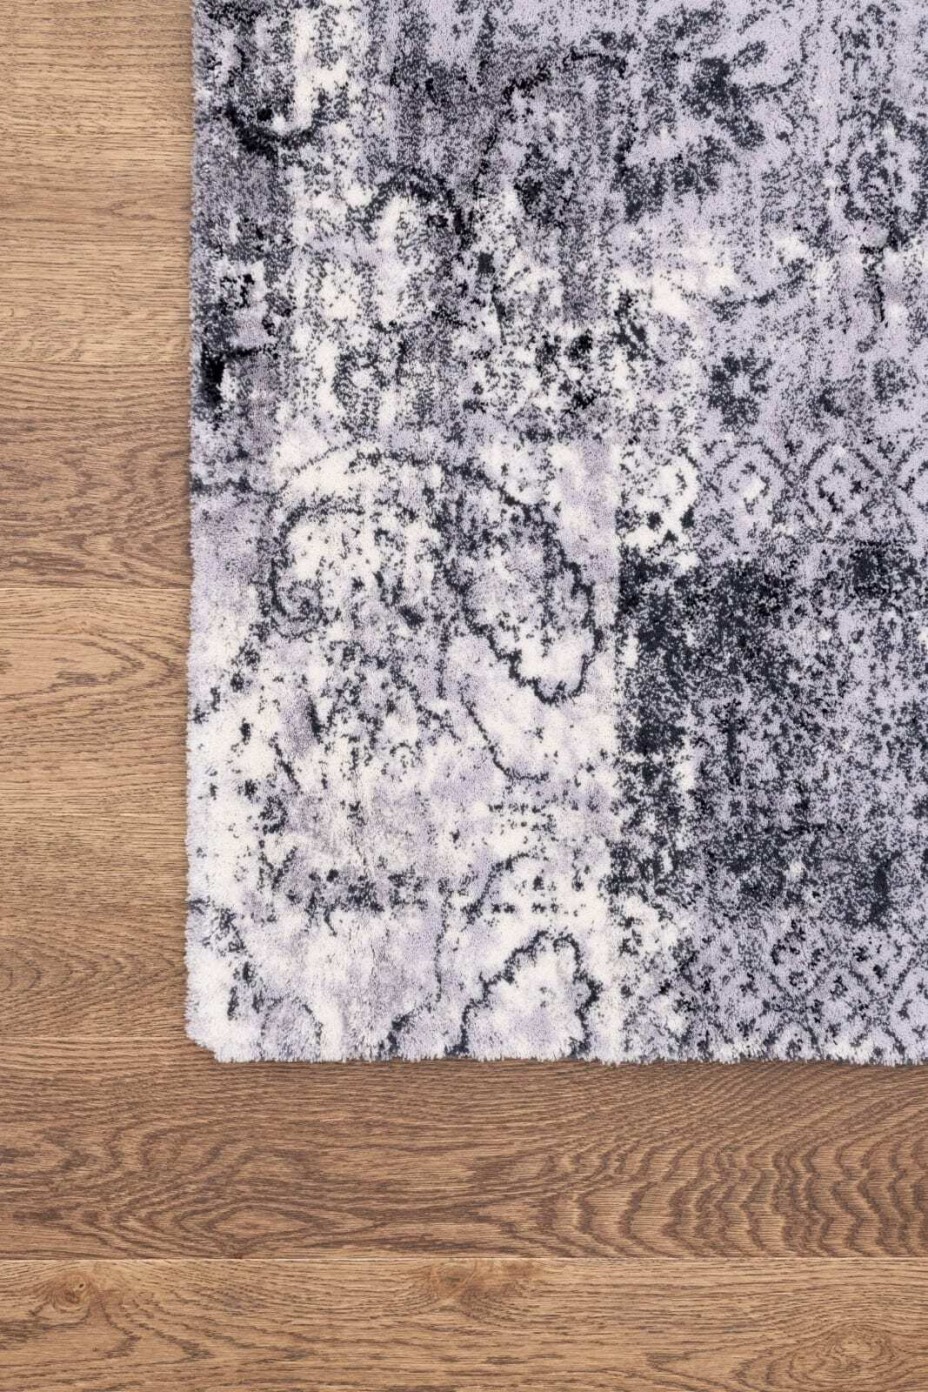 Eddie Graphite rug by Agnella